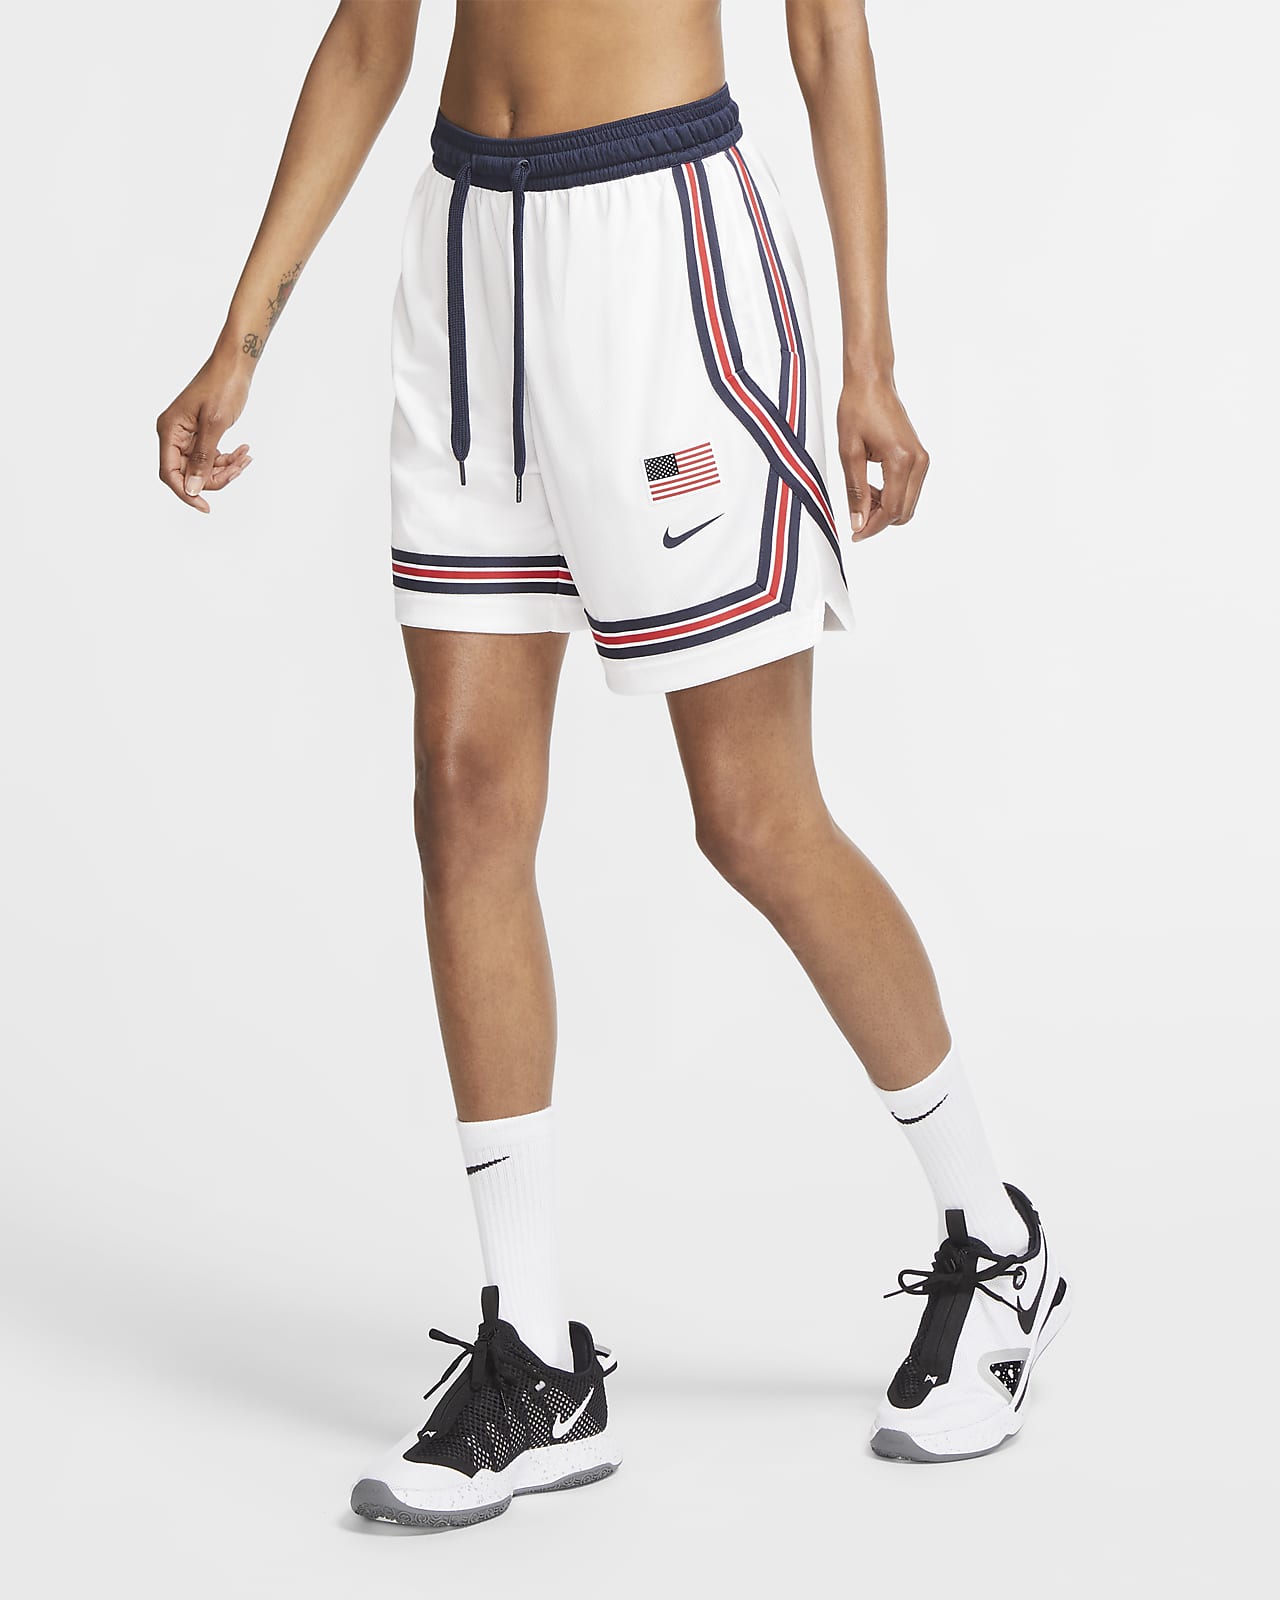 USA Women's Nike Basketball Shorts.